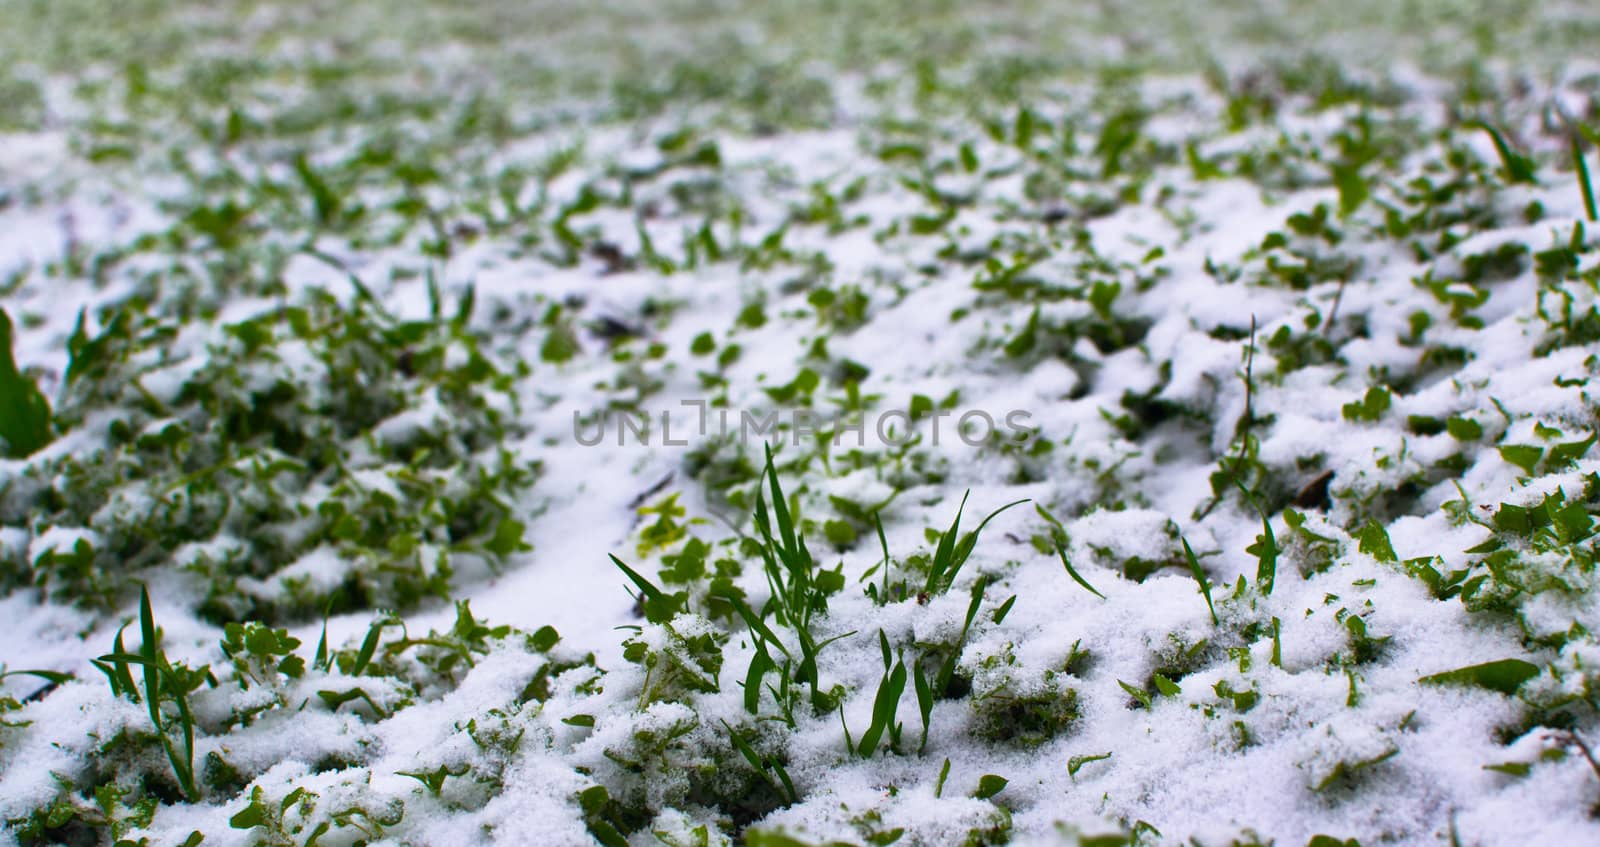 green grass in the snow by Lexxizm